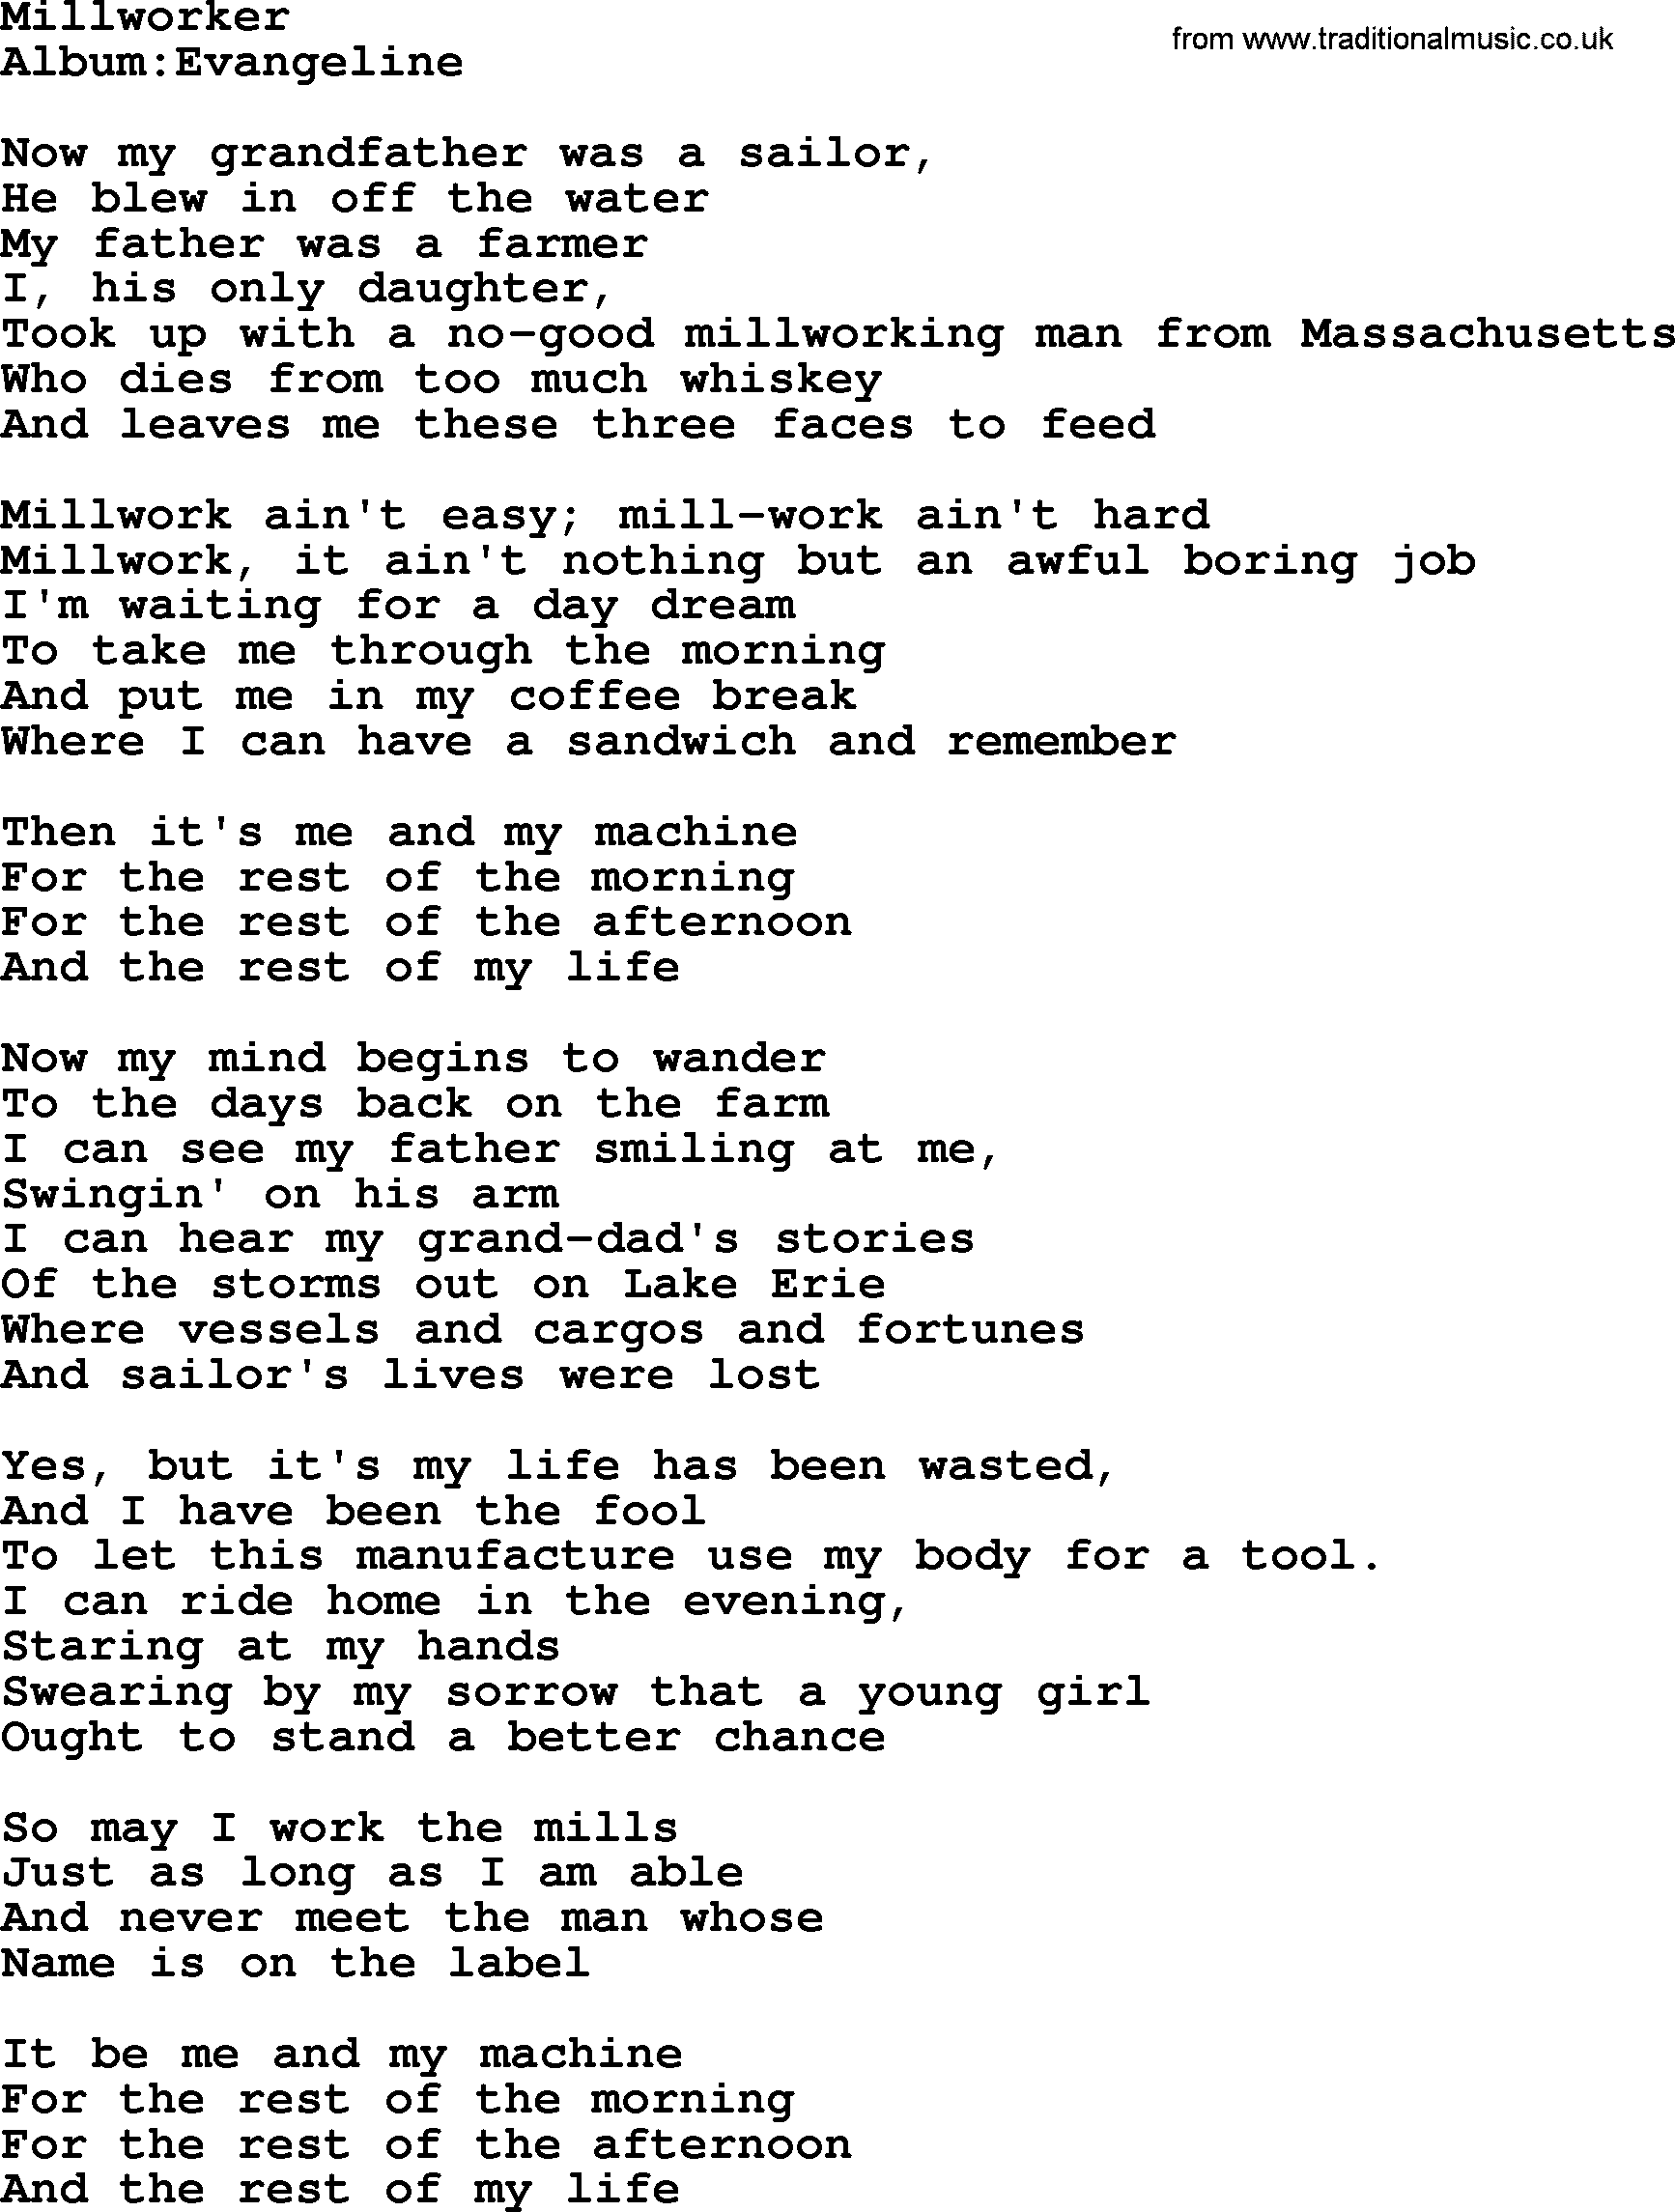 Emmylou Harris song: Millworker lyrics